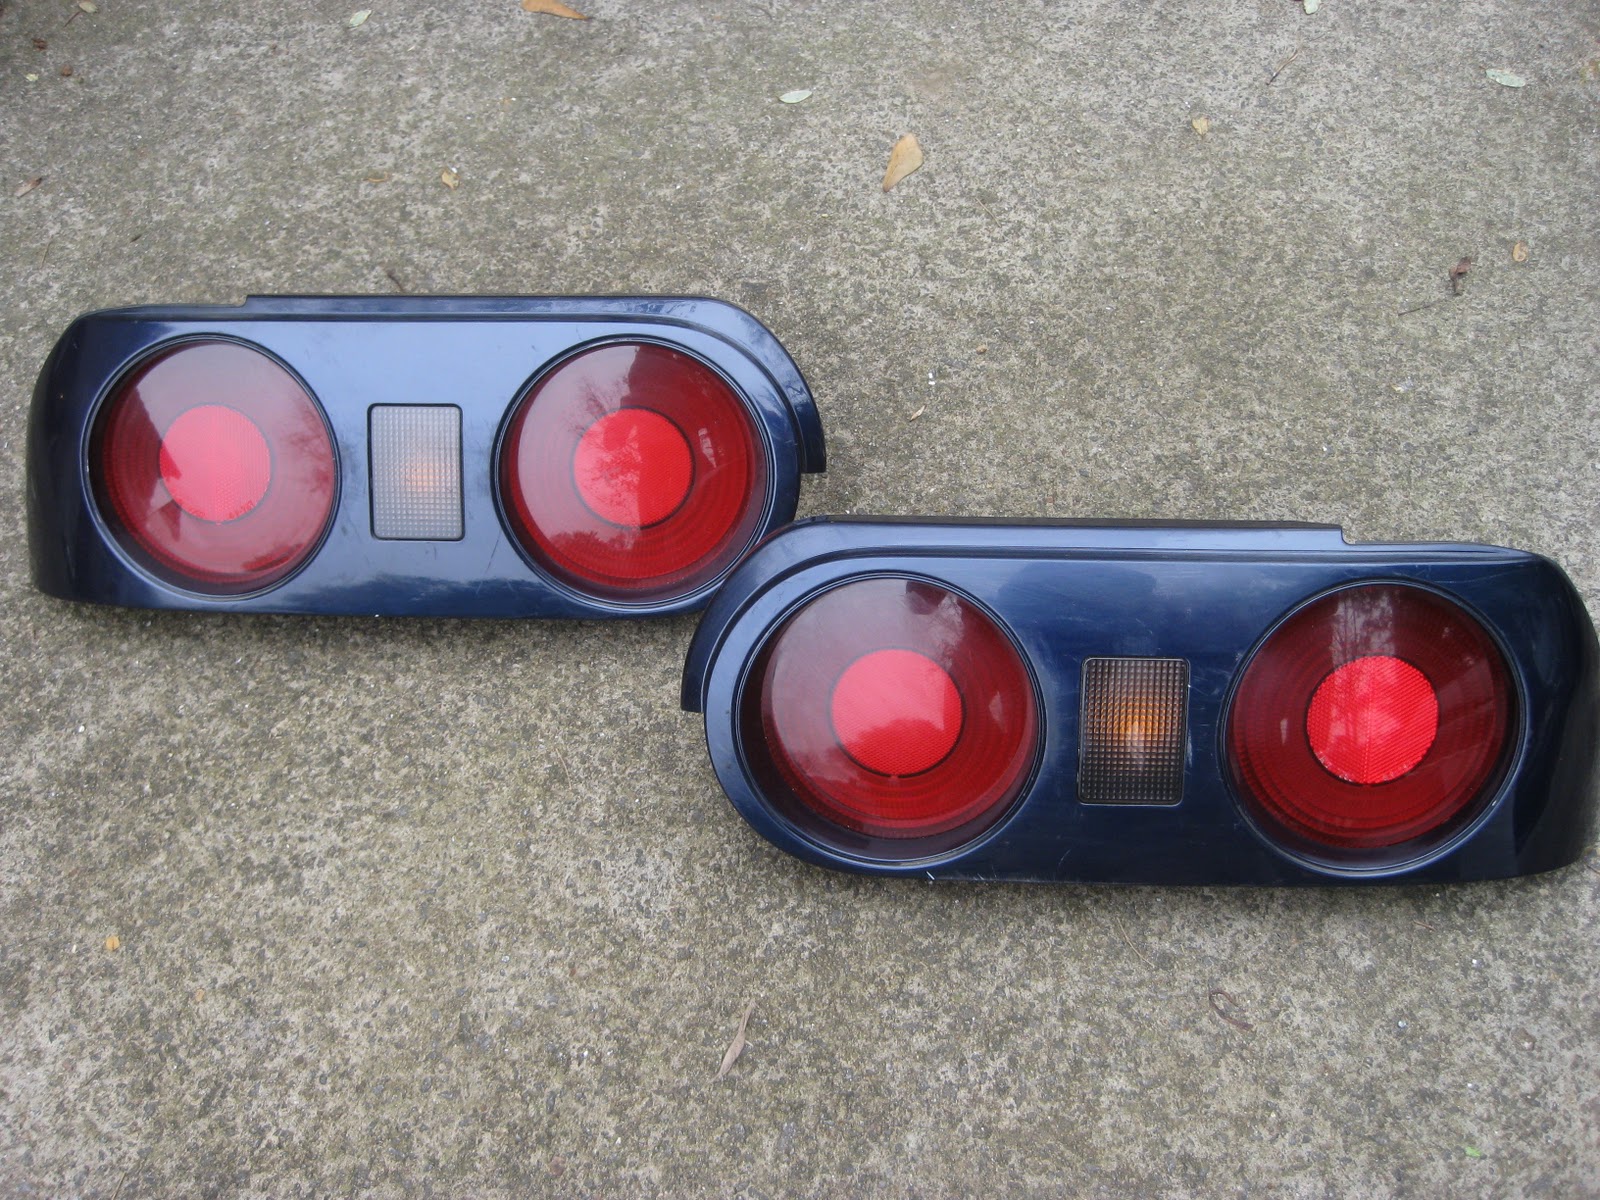 S14zenkiheadlights Headlight covers from my car truck parts looking